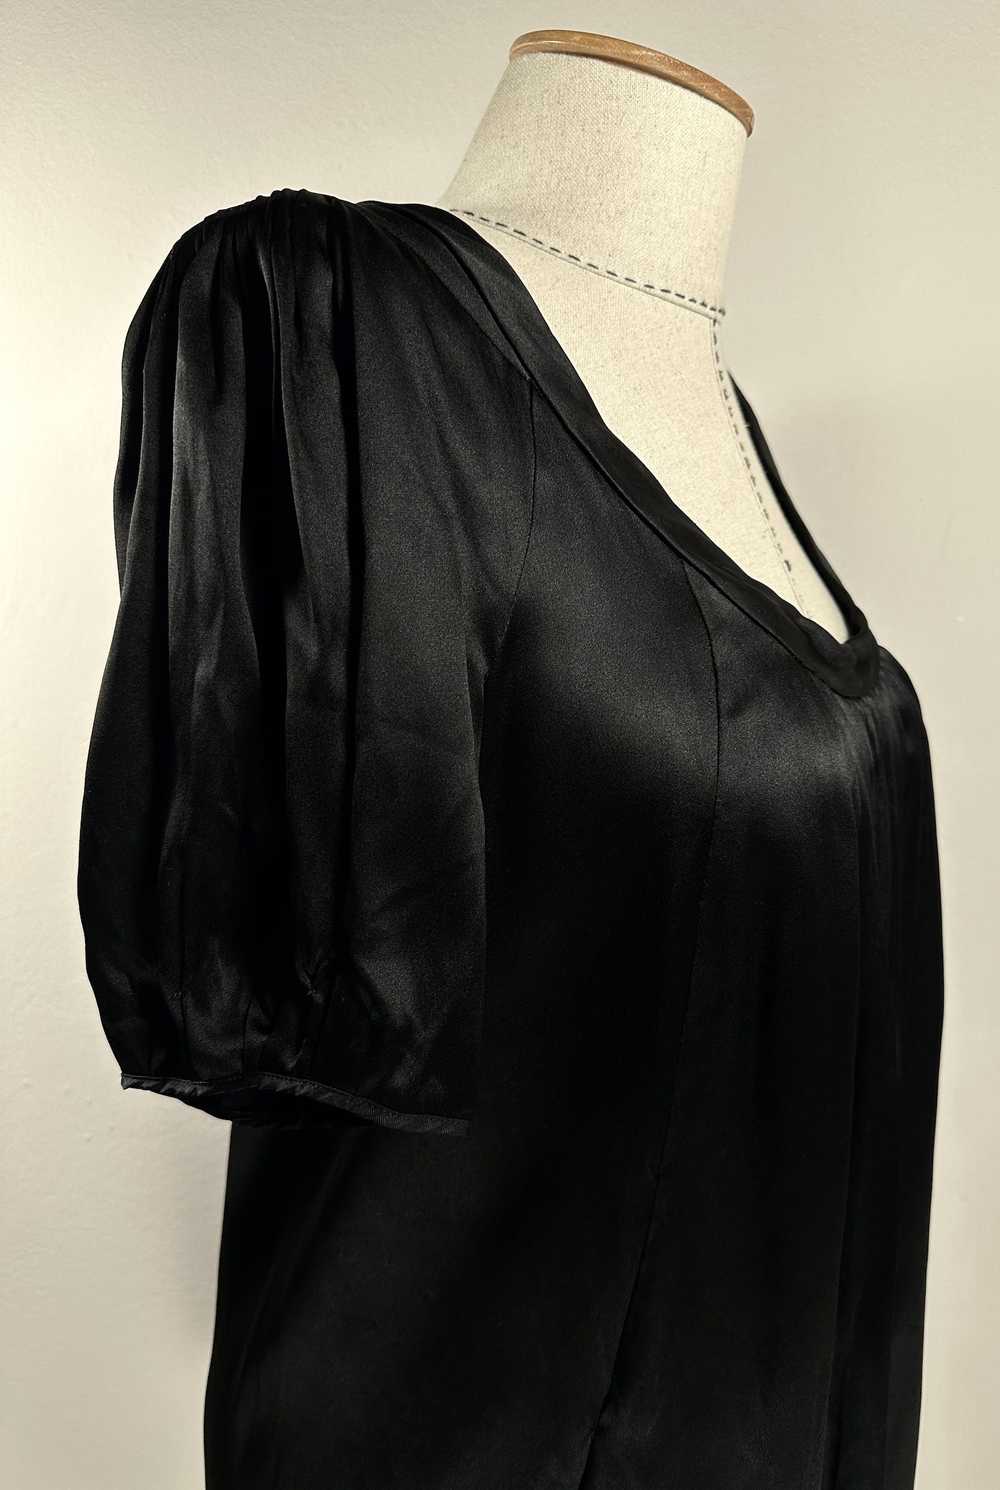 Miu Miu Silk Black Dress - image 3